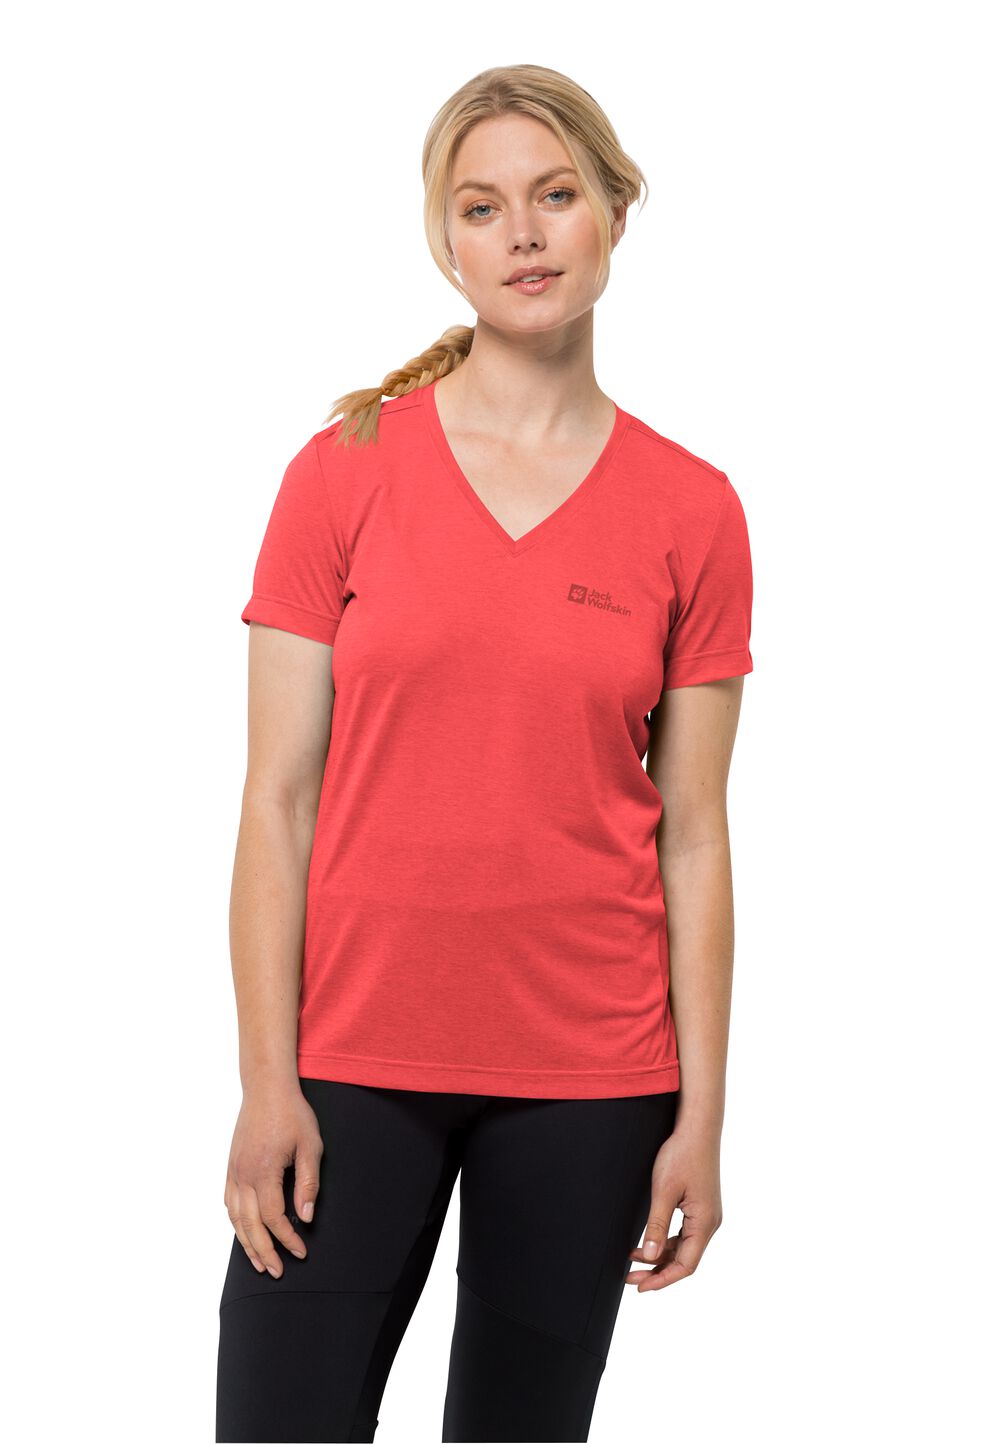 Jack Wolfskin Crosstrail T-Shirt Women Functioneel shirt Dames L rood vibrant red